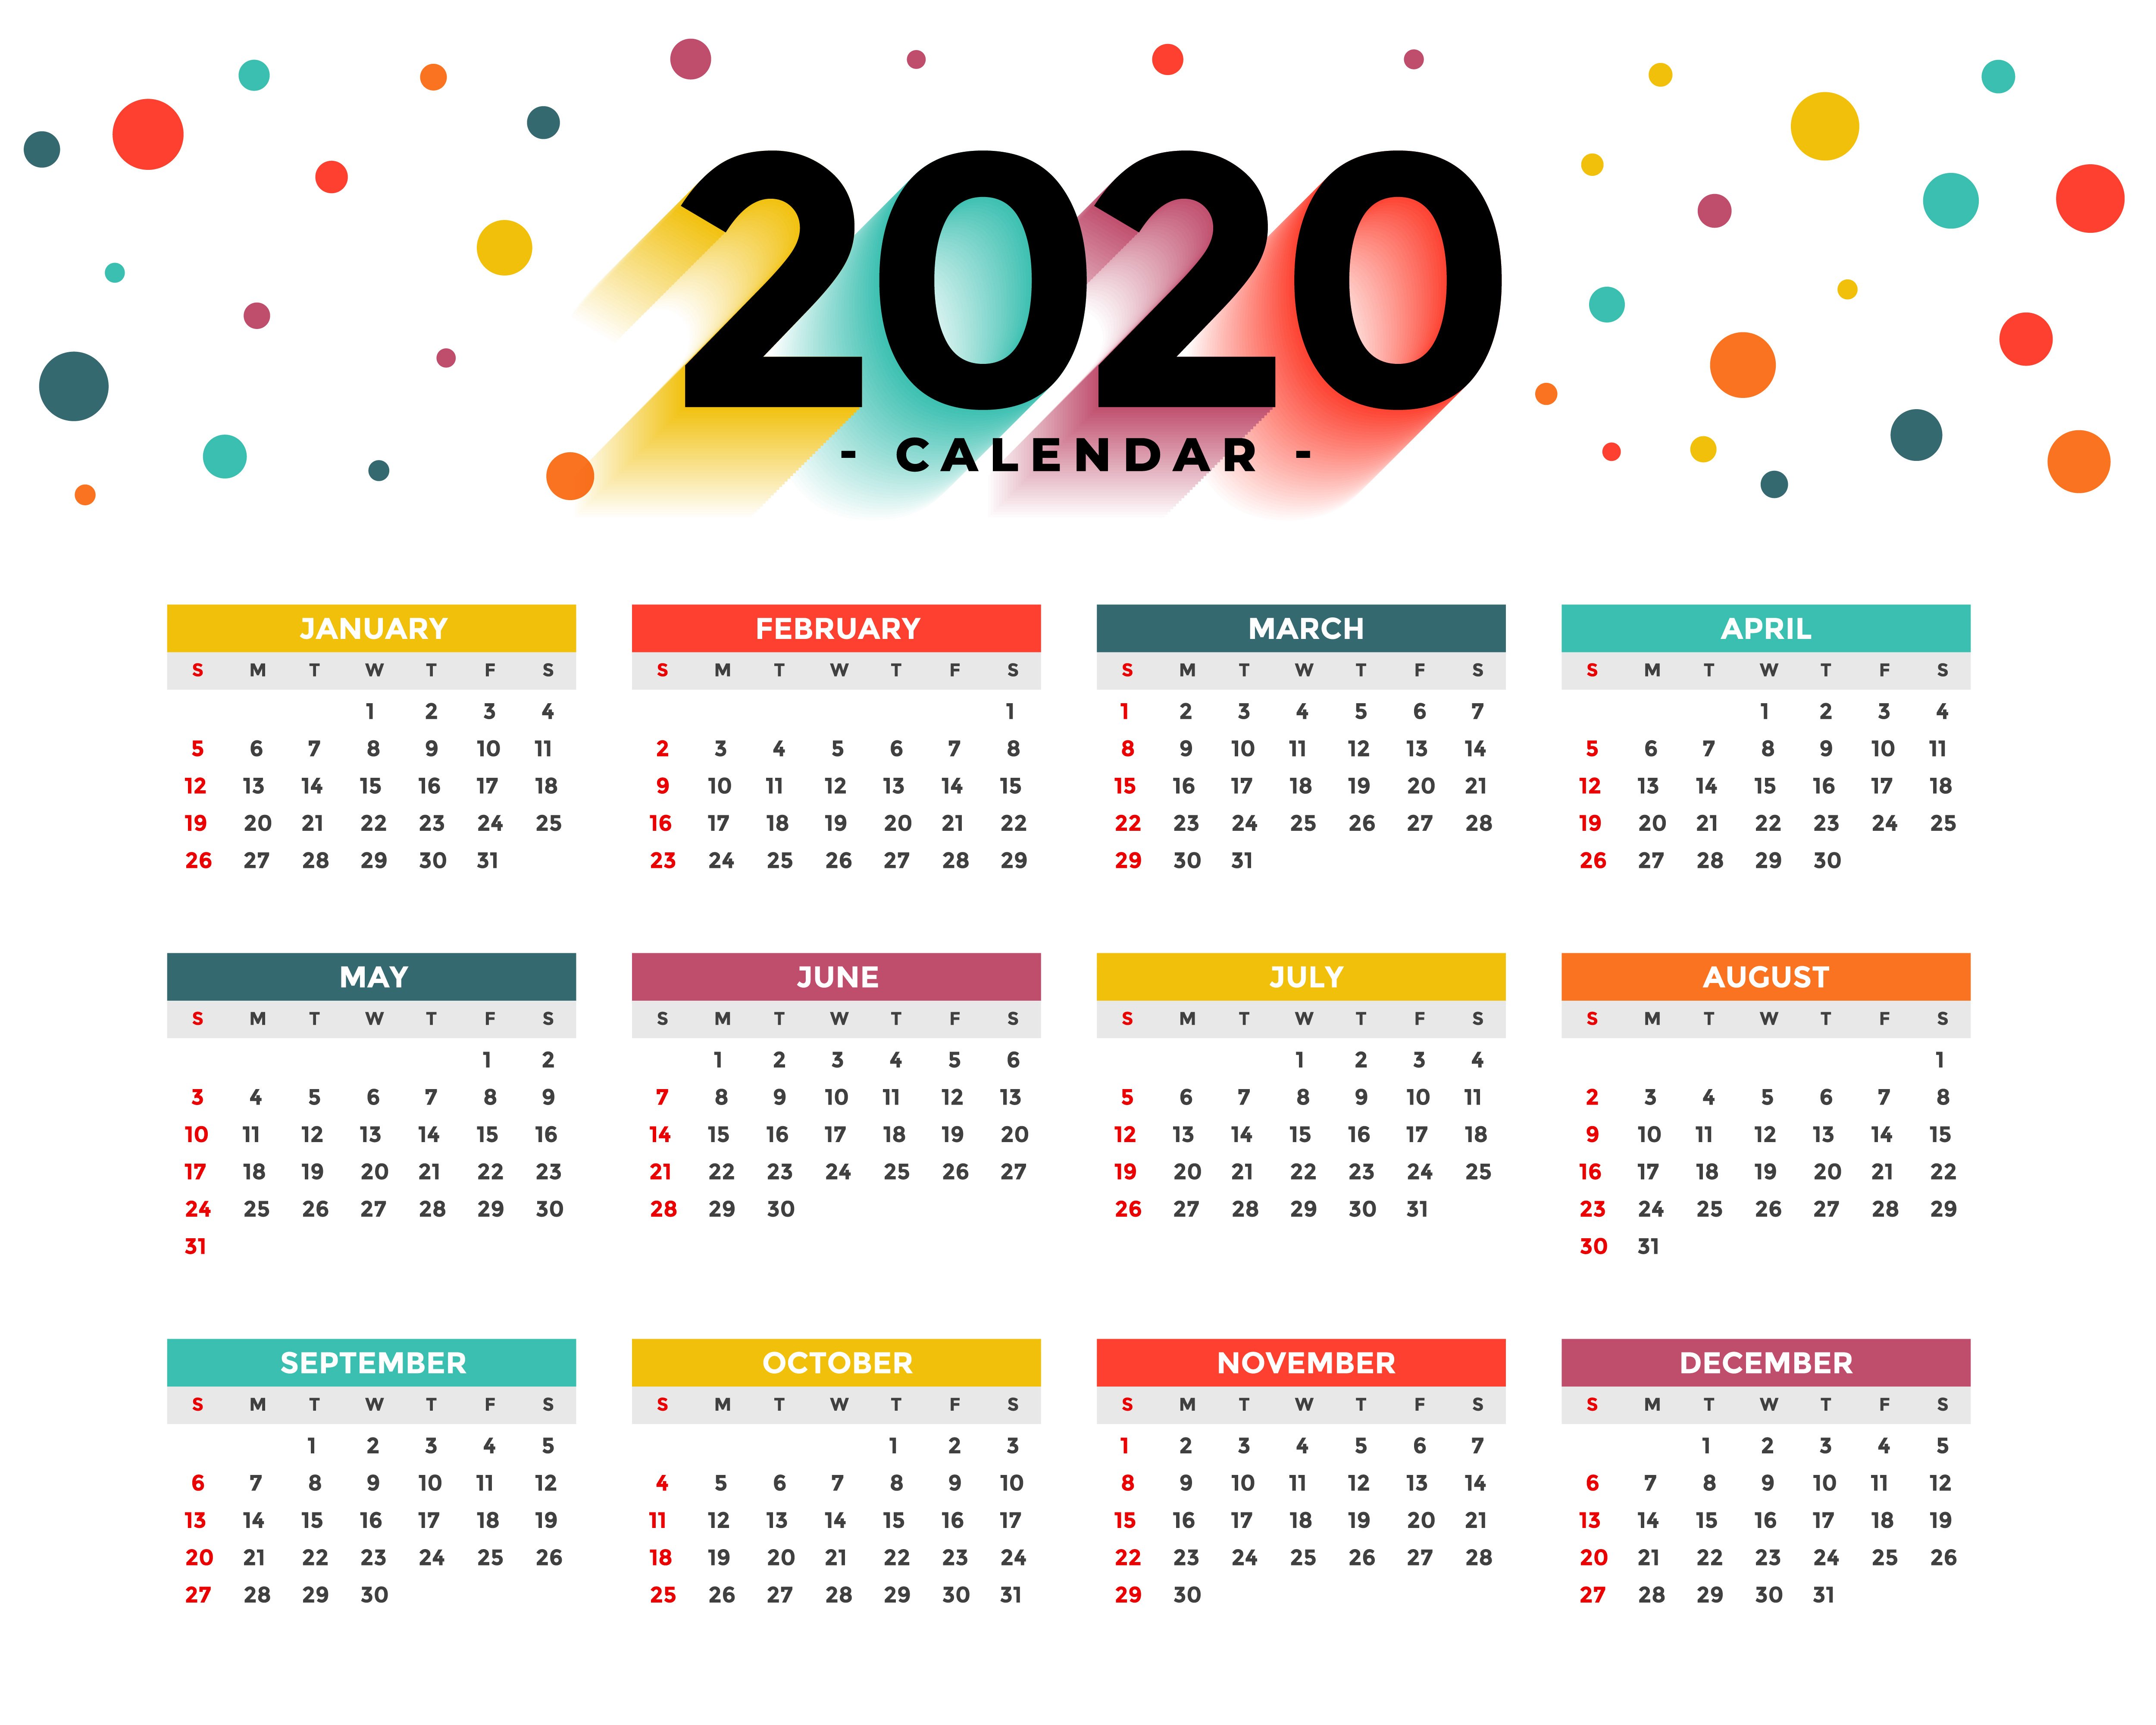 Calendario Scolastico a.s. 2020/21